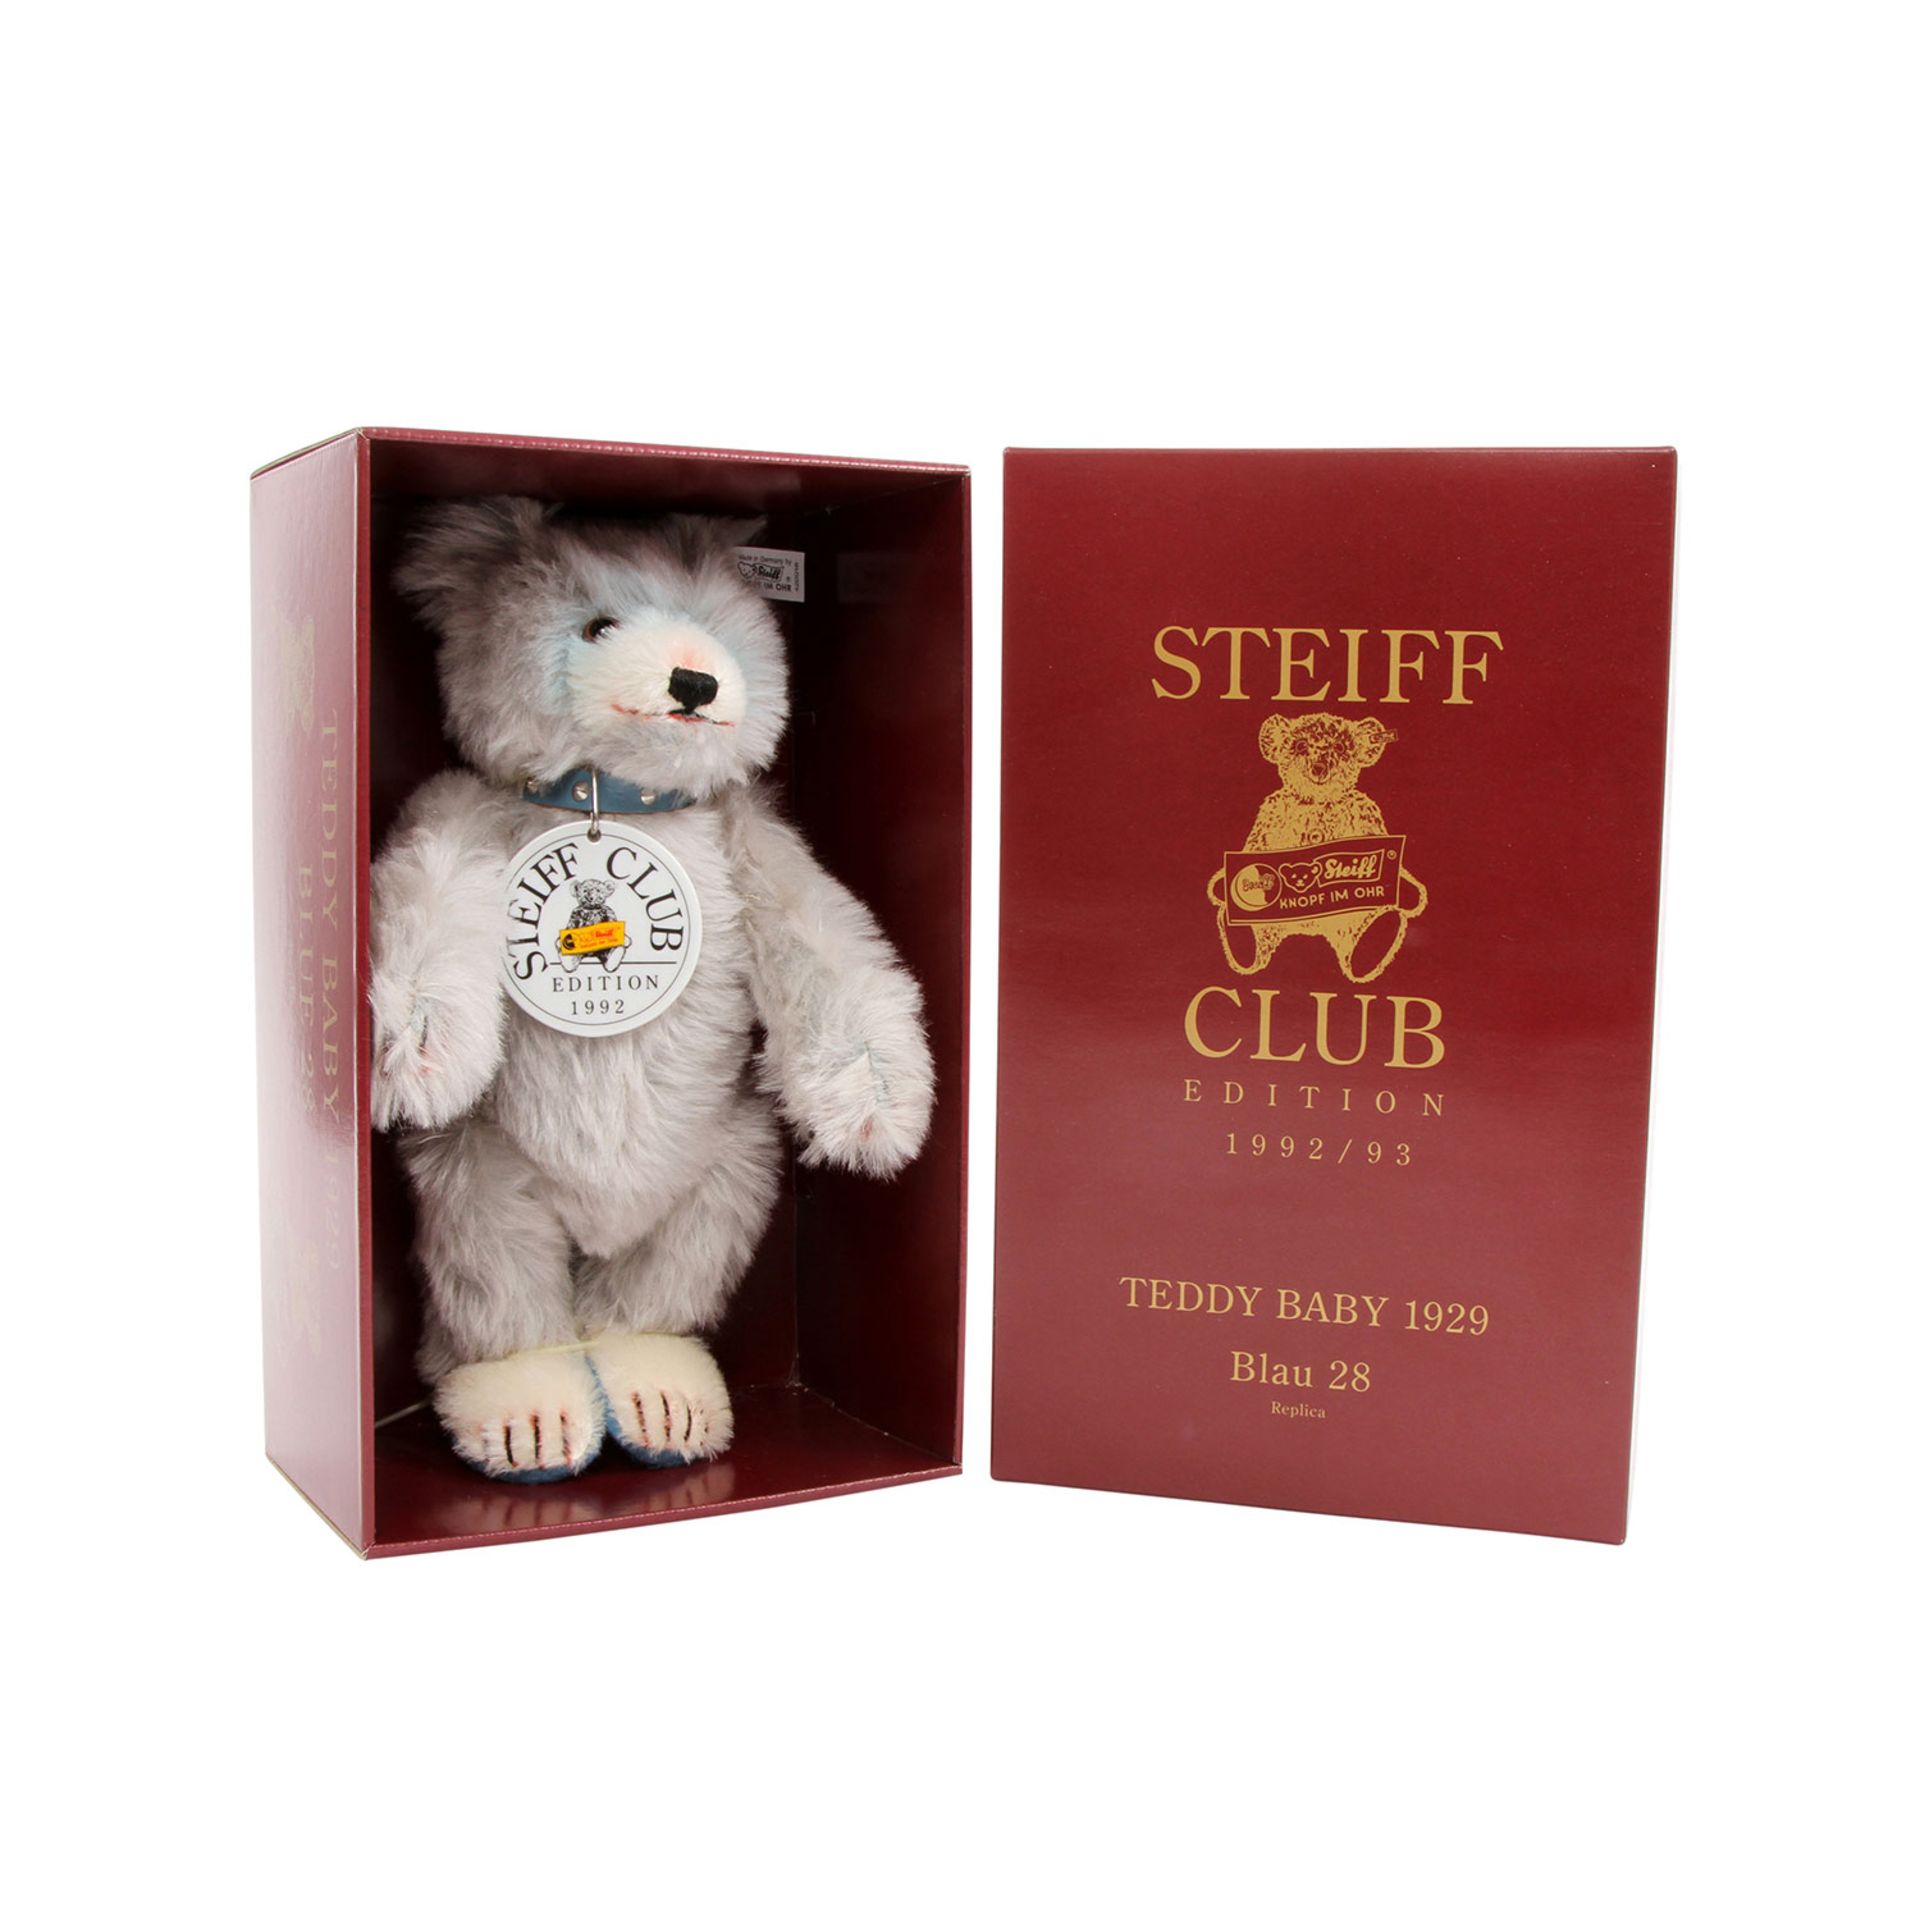 STEIFF Teddy Baby Nr. 420016, 1992, Steiff-Club-Edition, Replik v. 1929, limit. Aufl. von 7959 - Image 4 of 4